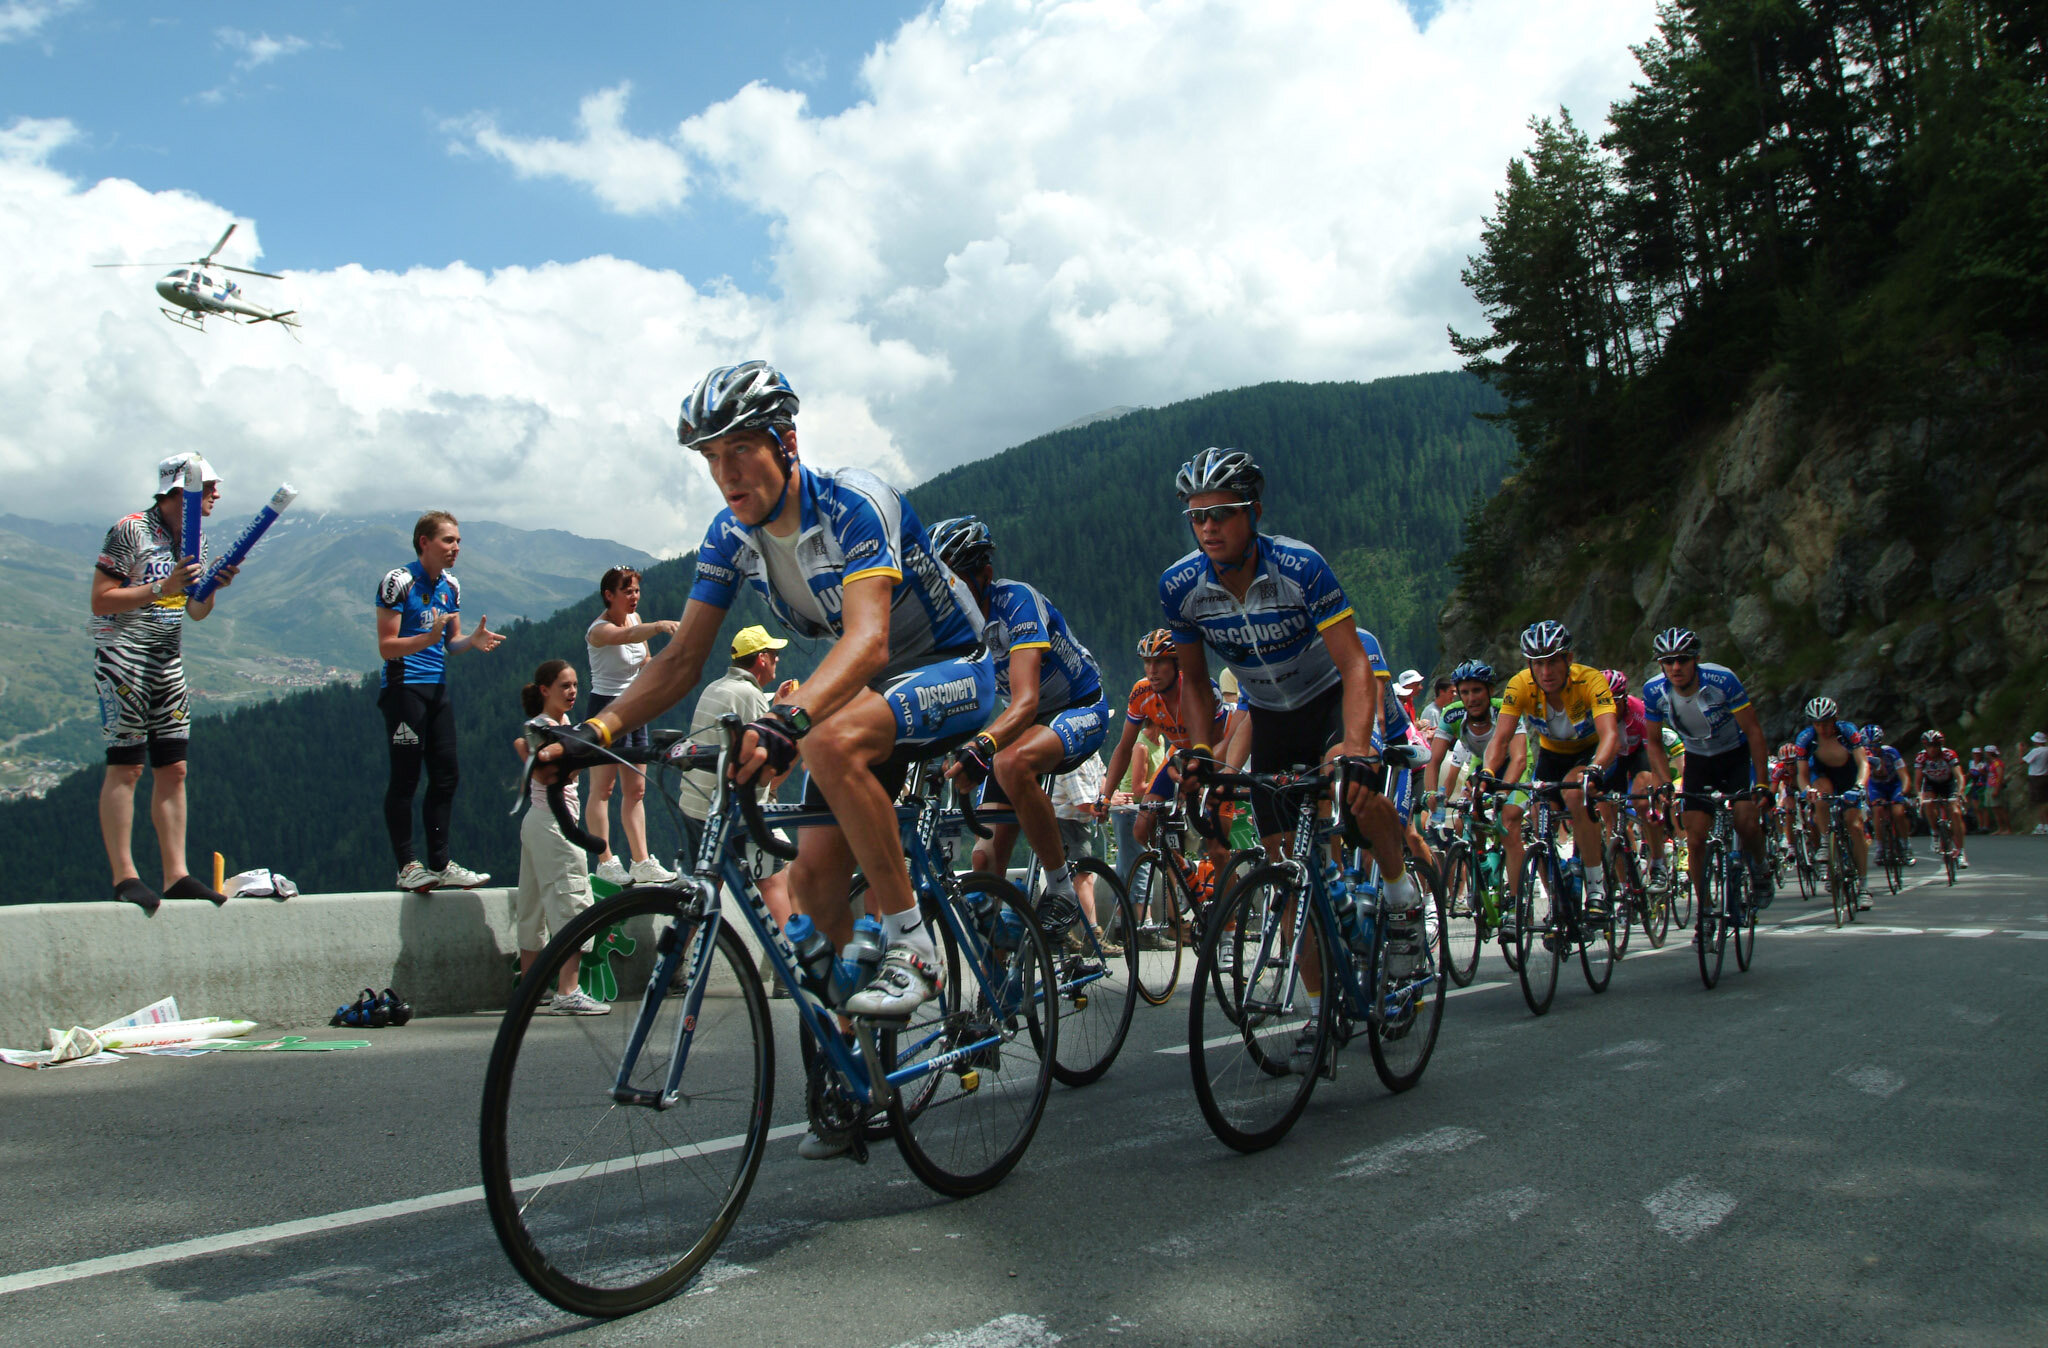    Tour de France, col du Galibier    Team U.S. Postal Service 